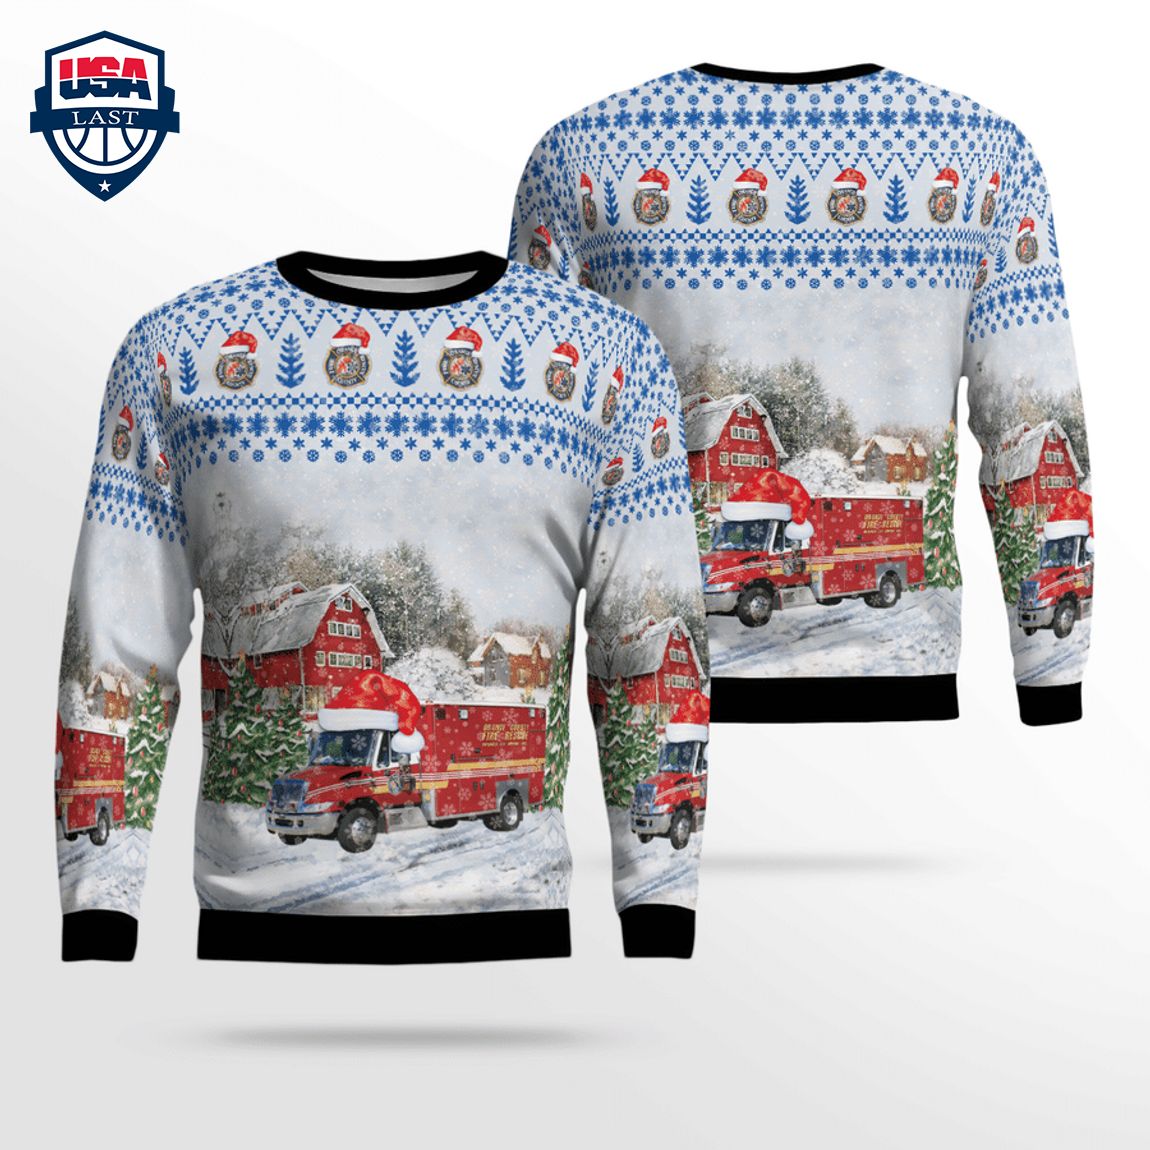 Florida Orange County Fire Rescue Paramedic 3D Christmas Sweater – Saleoff